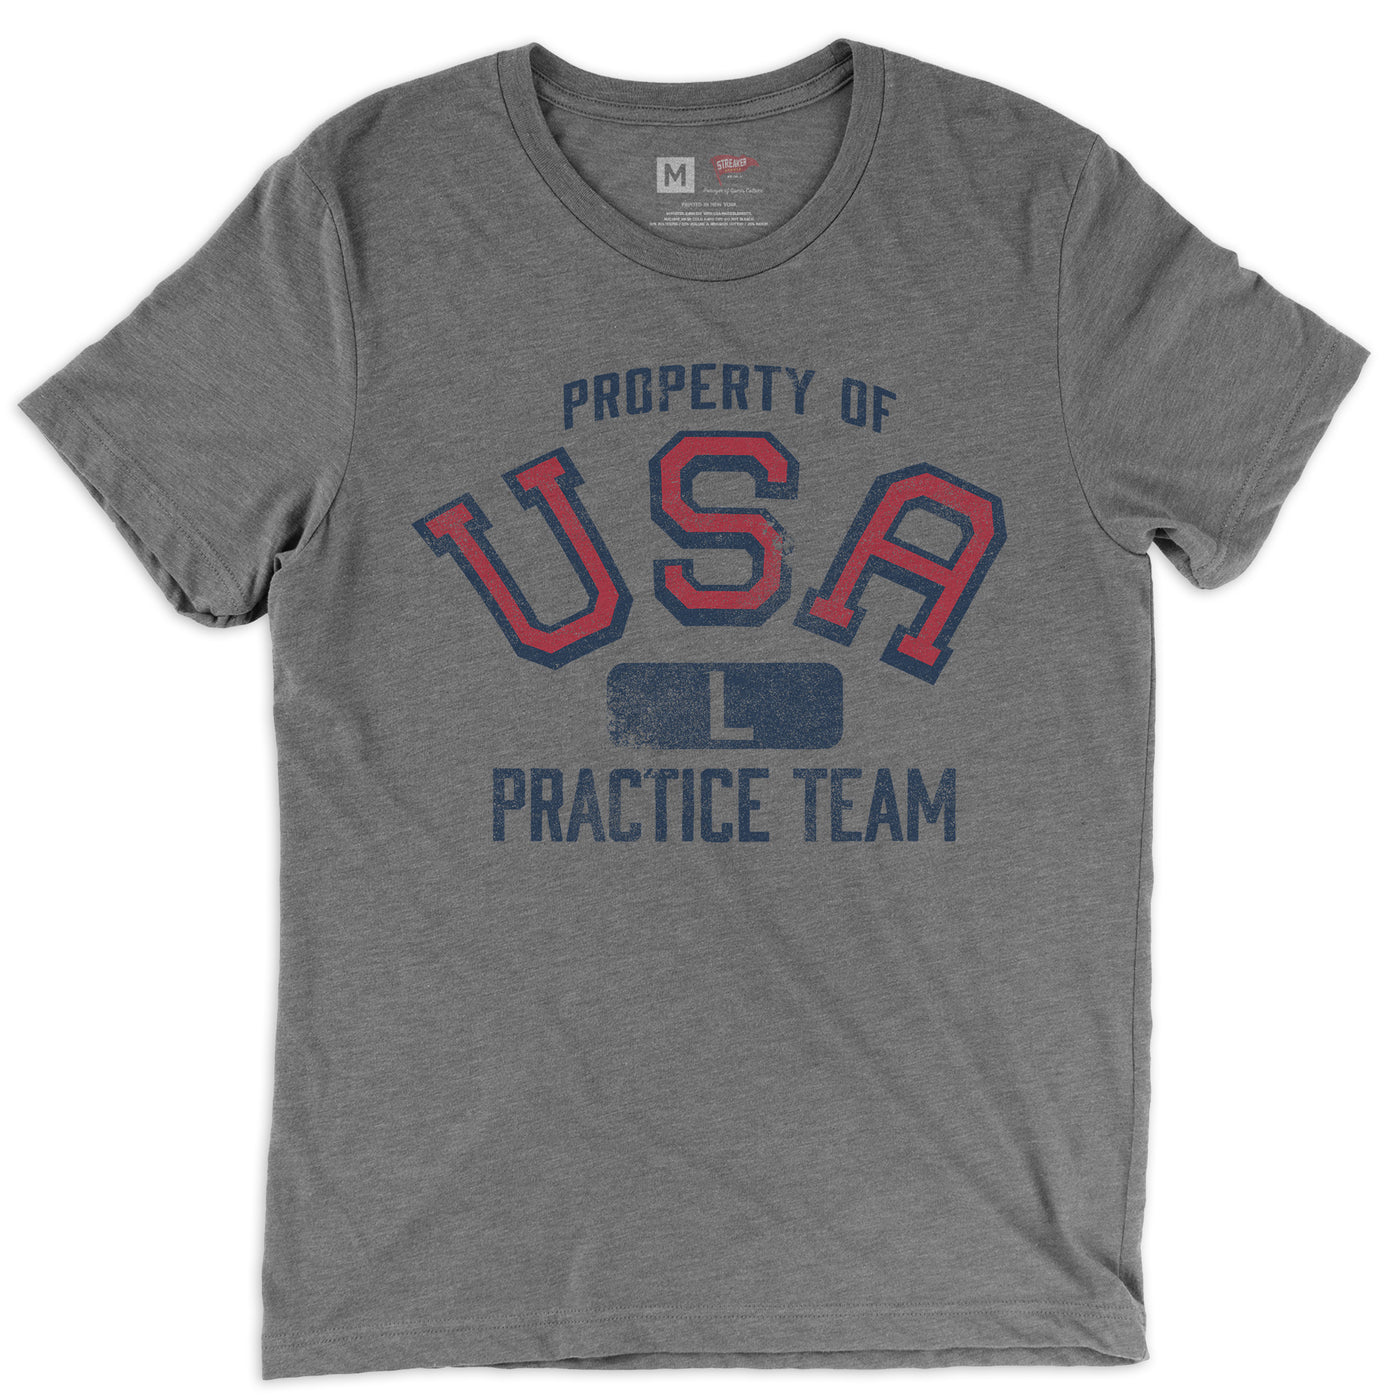 USA Practice Team Tee - Streaker Sports